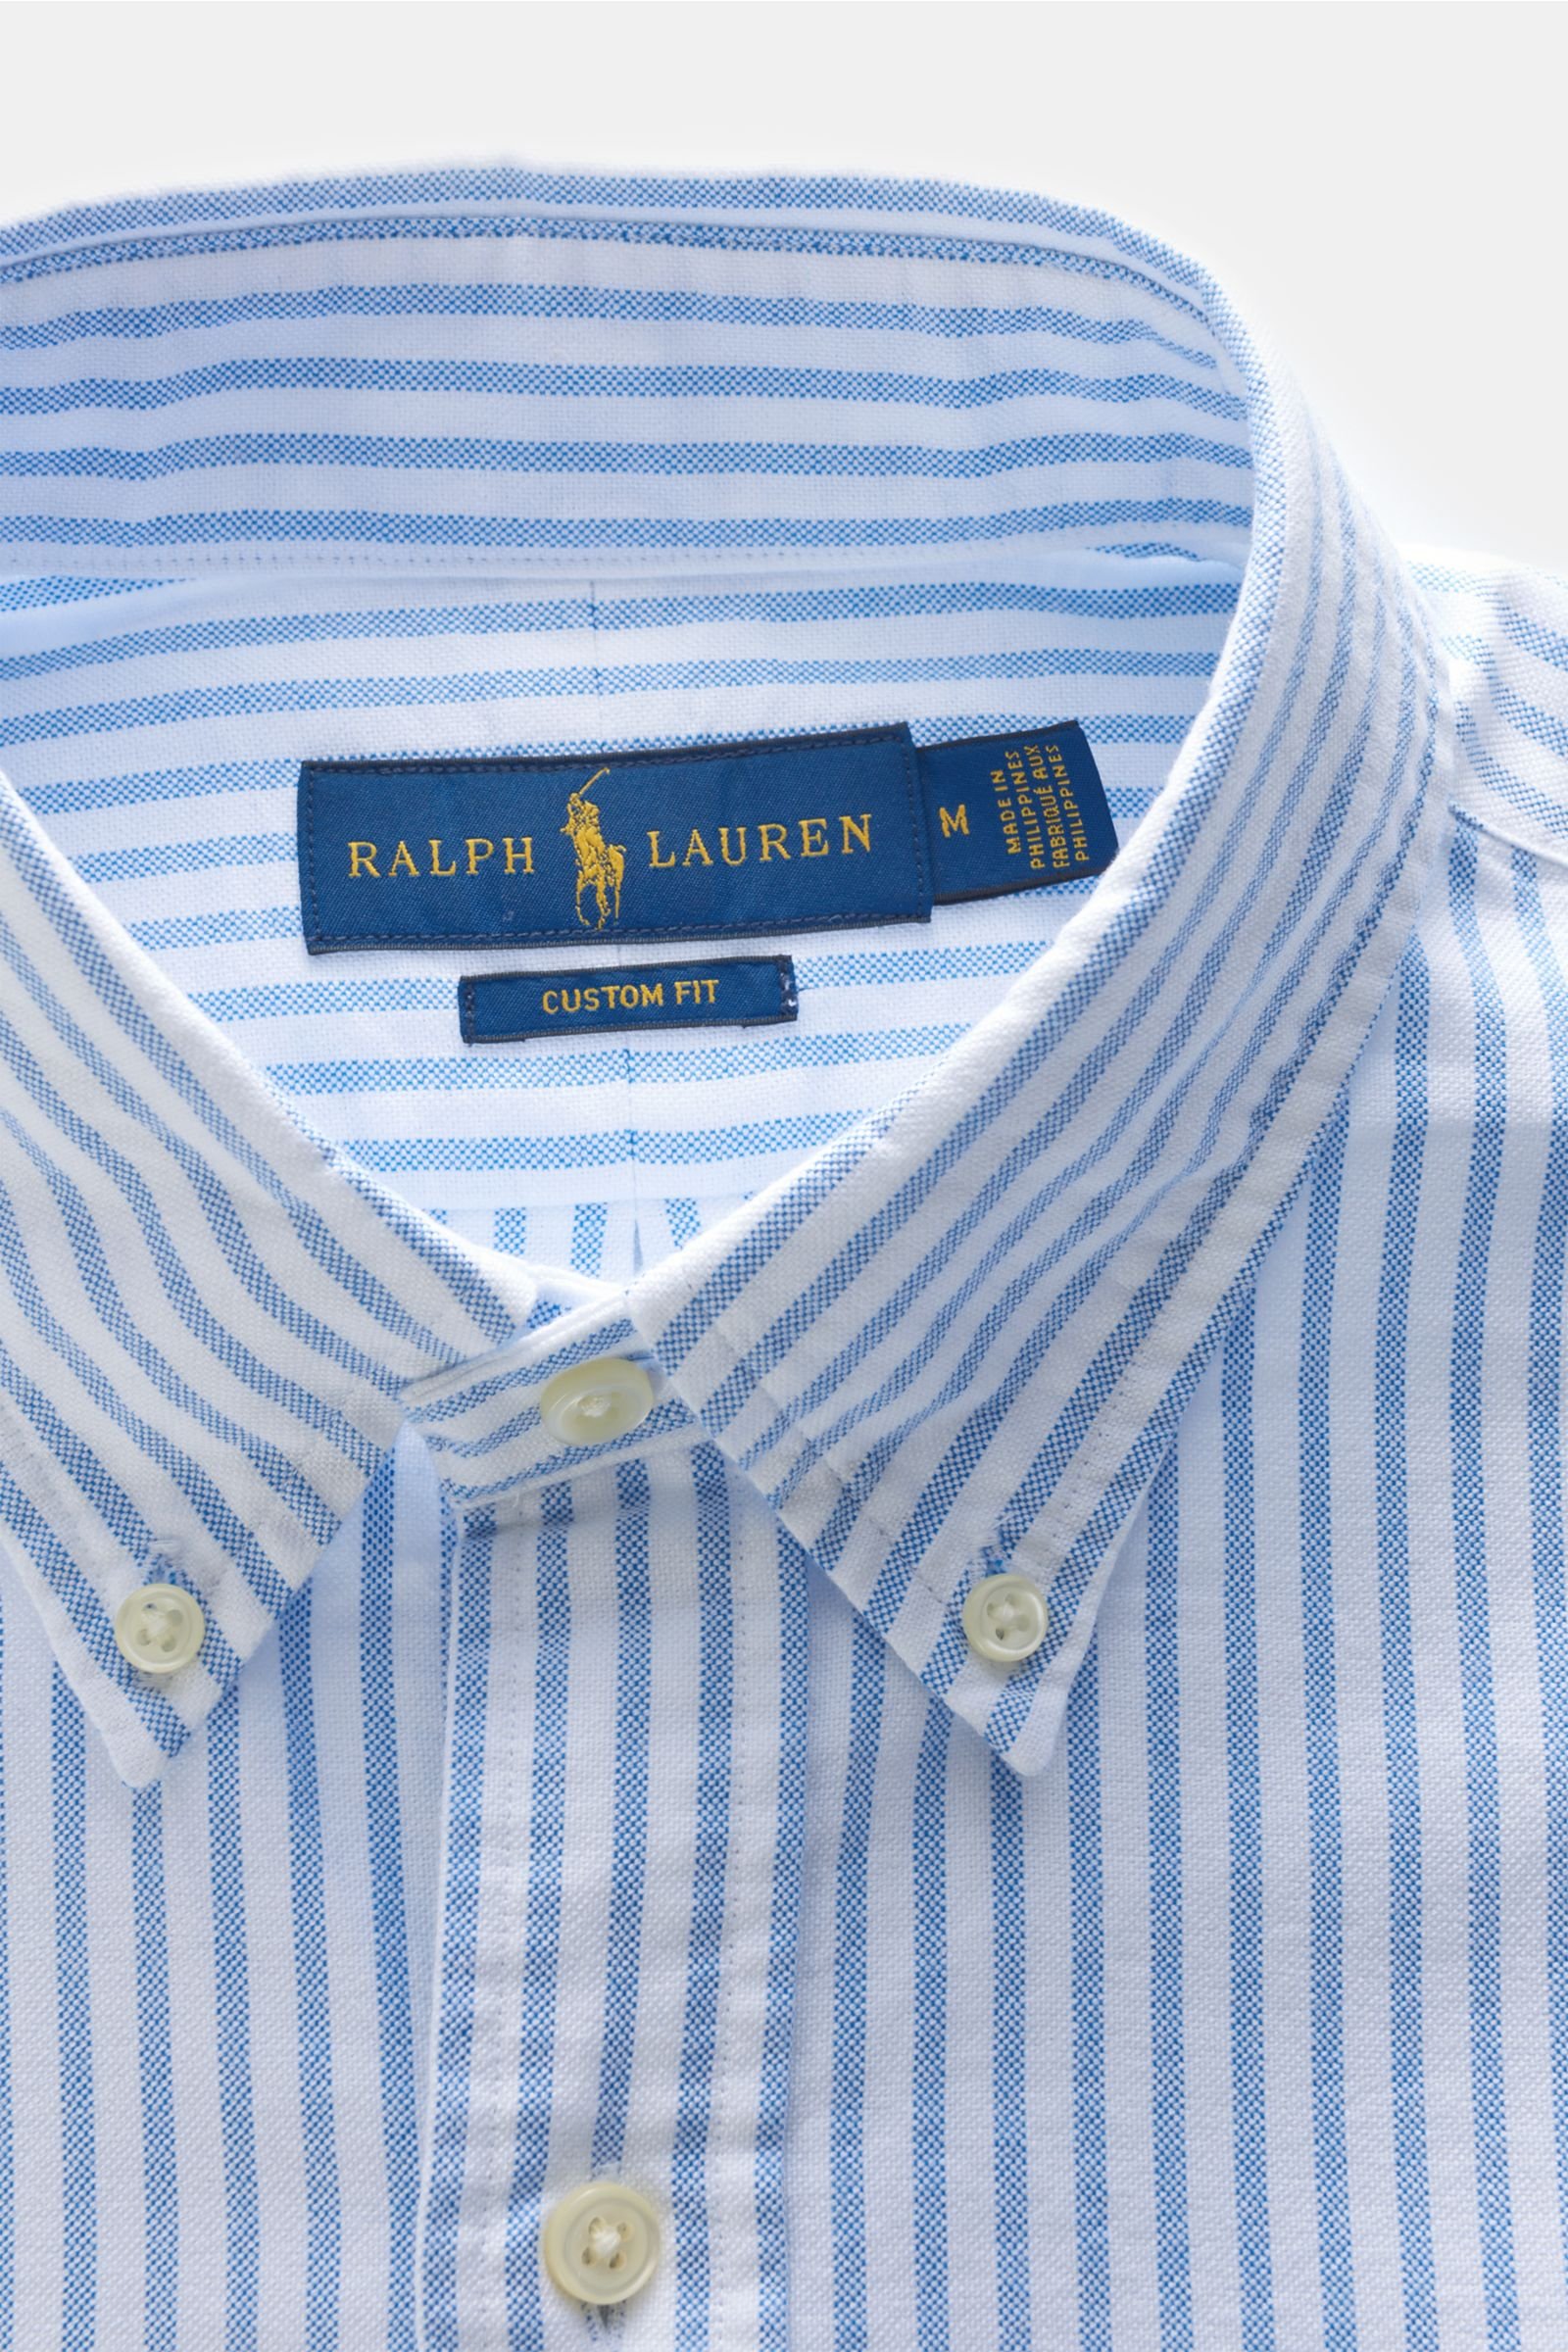 blue and white ralph lauren shirt